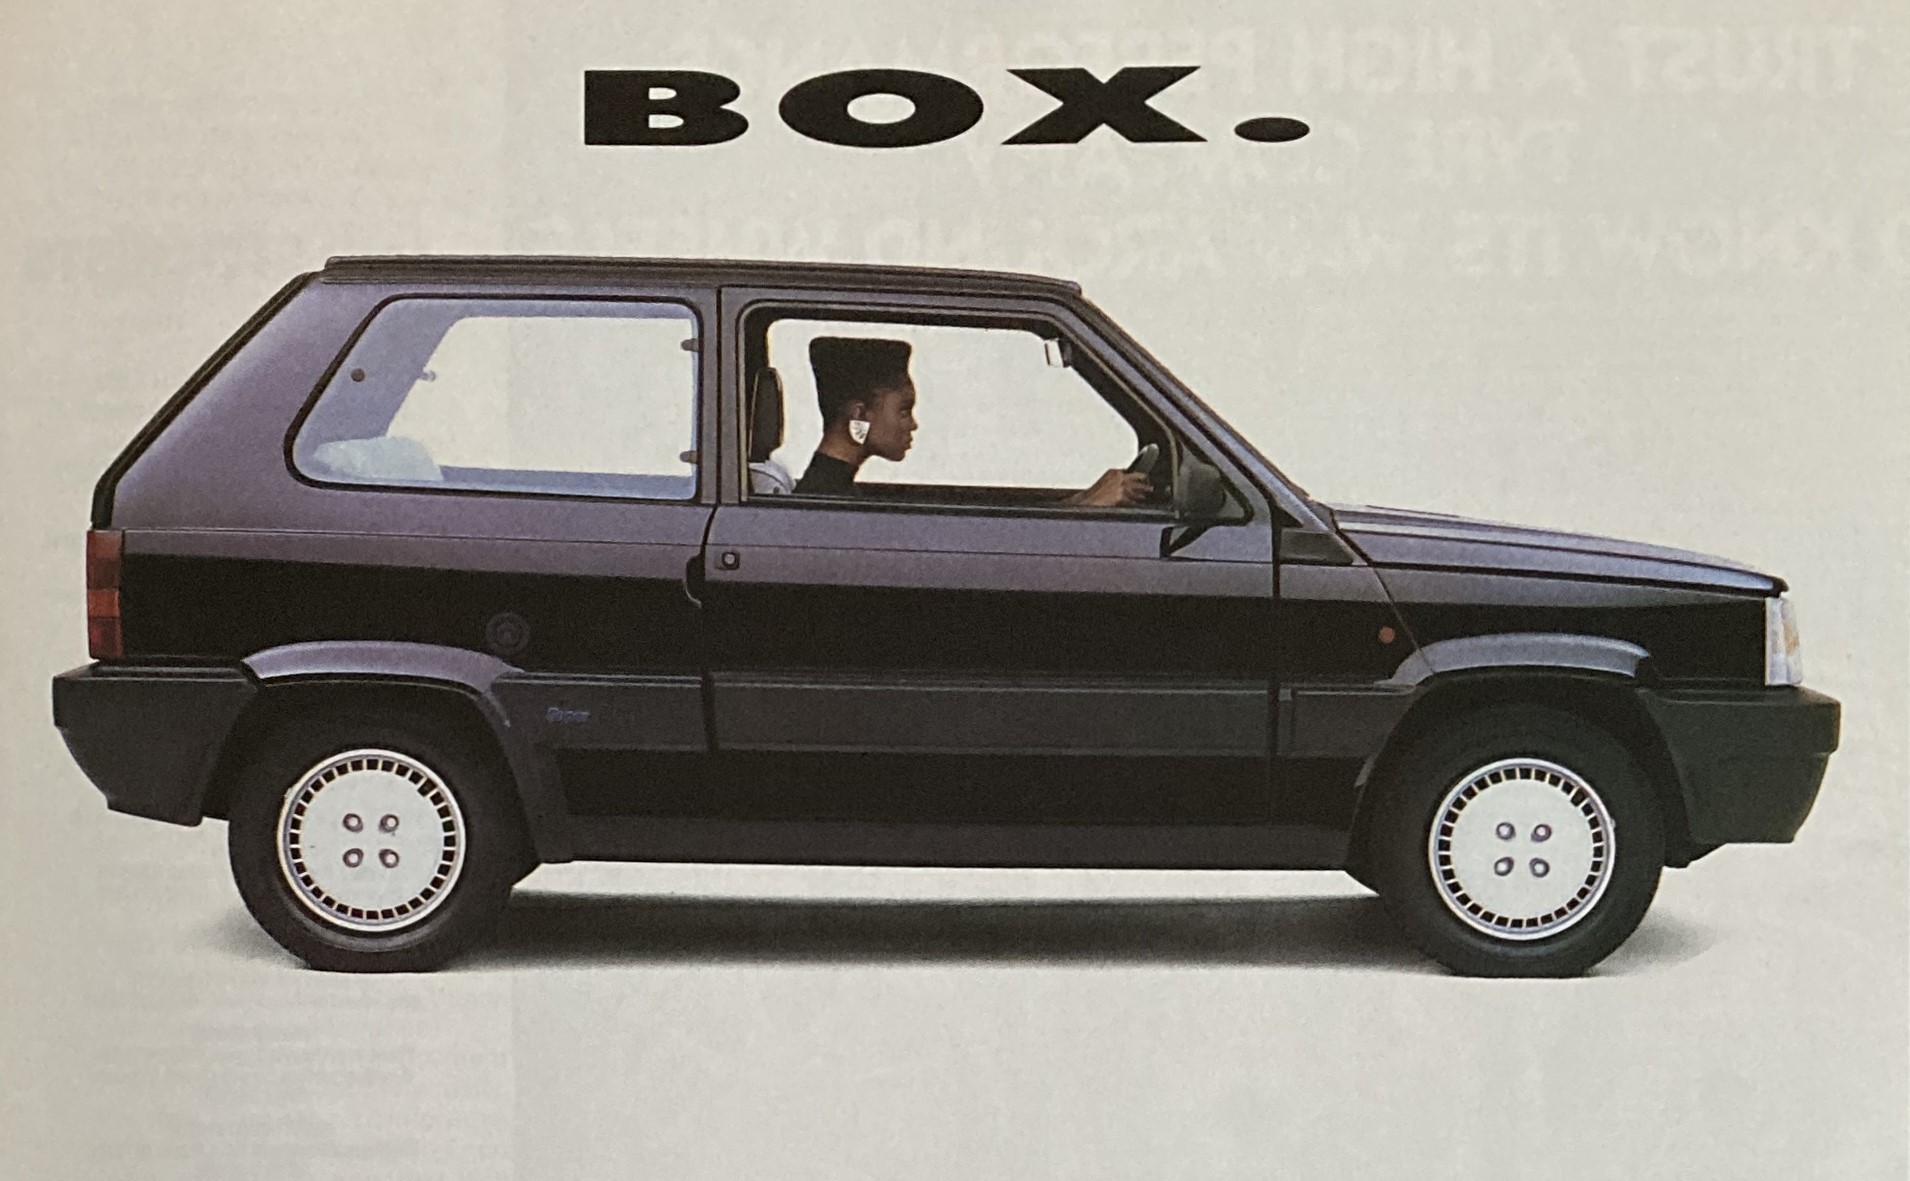 Ad Break: The Fiat Panda was a box that rocks